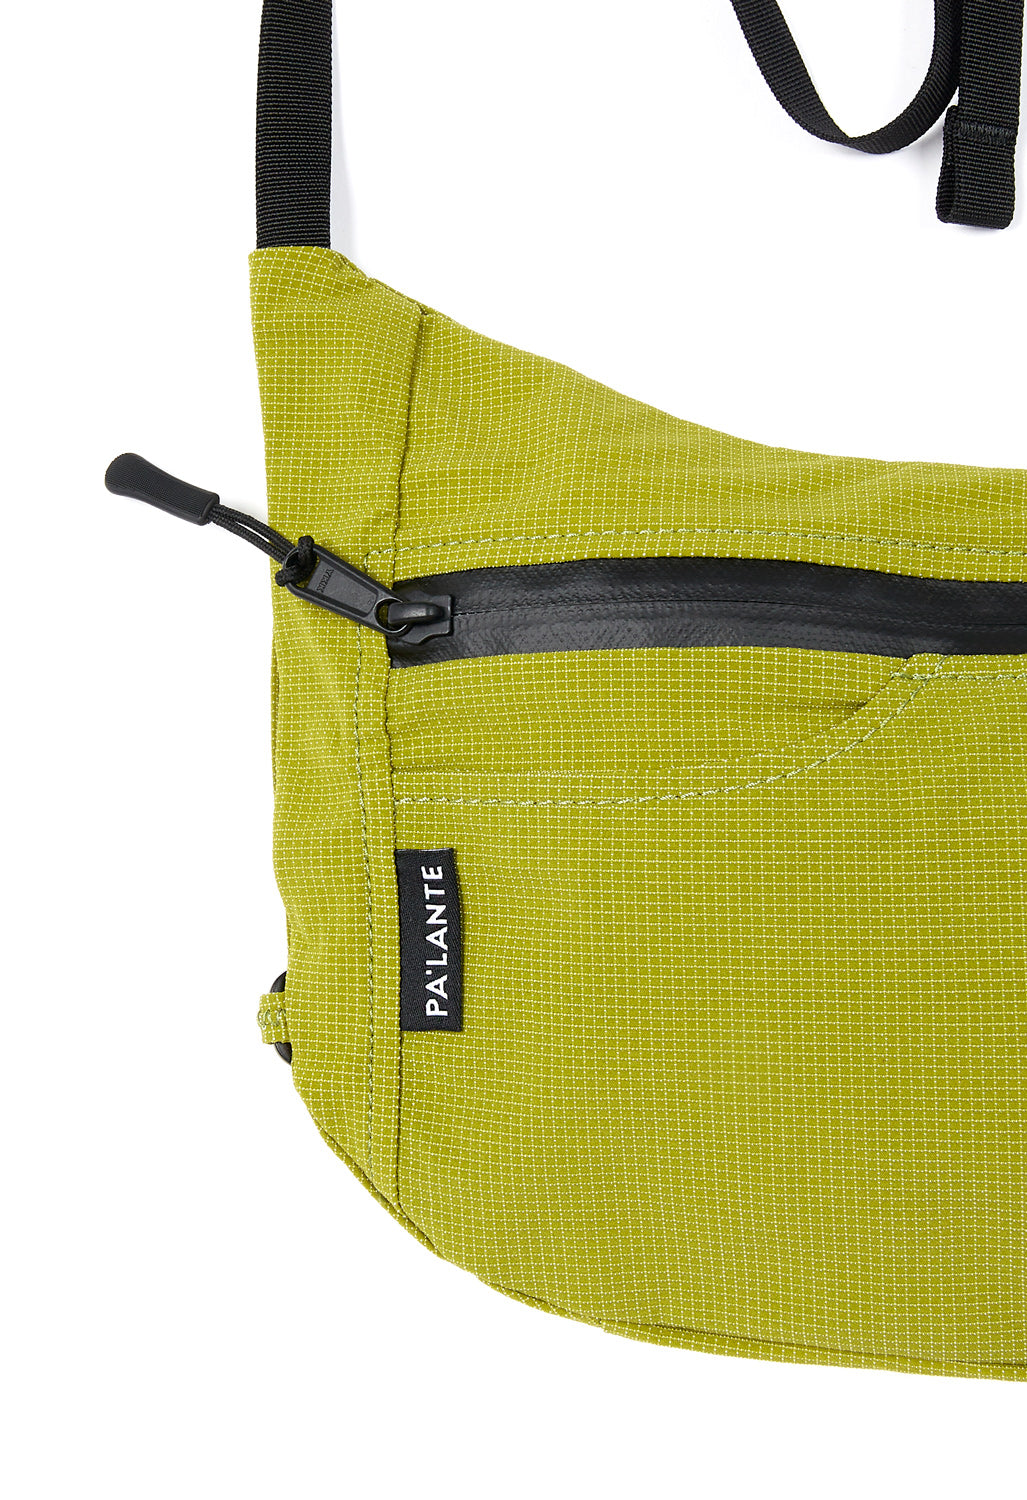 Pa'lante Packs Sidebag - Lichen Uhmwpe Grid Mesh – Outsiders Store UK